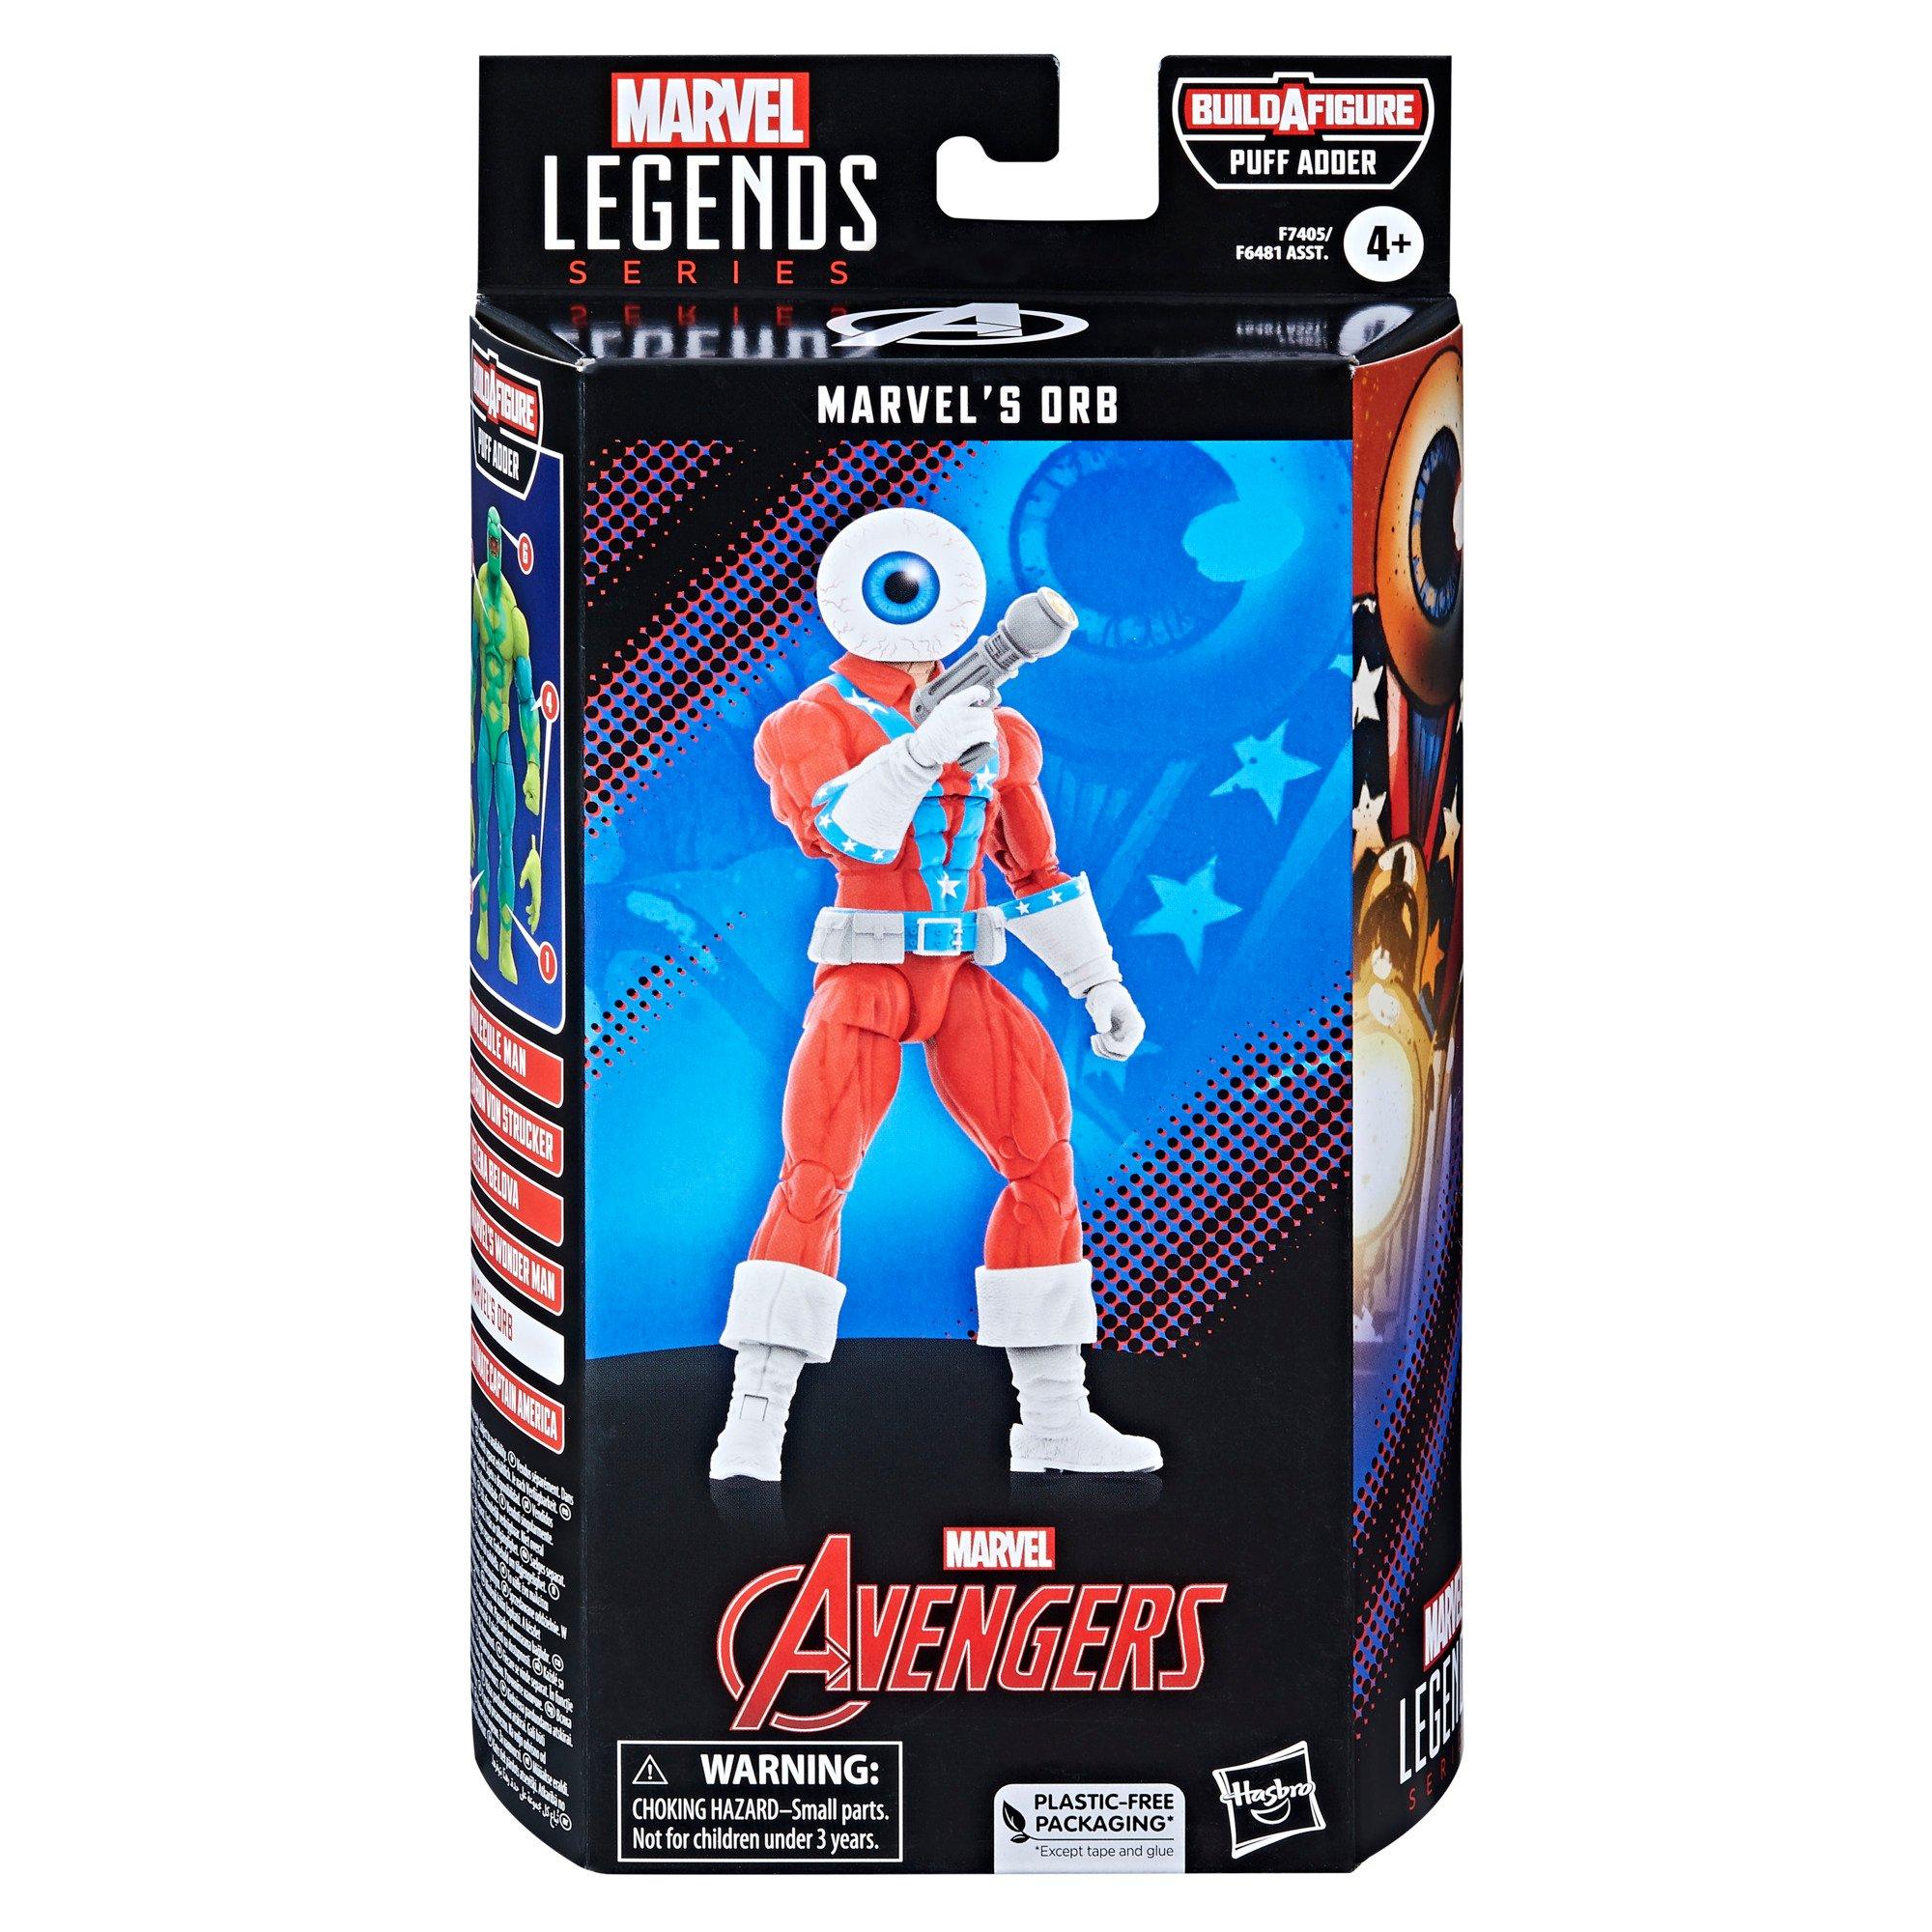 Hasbro Marvel Legends Series Avengers Marvel's Orb Build-A-Figure 6-in Action Figure